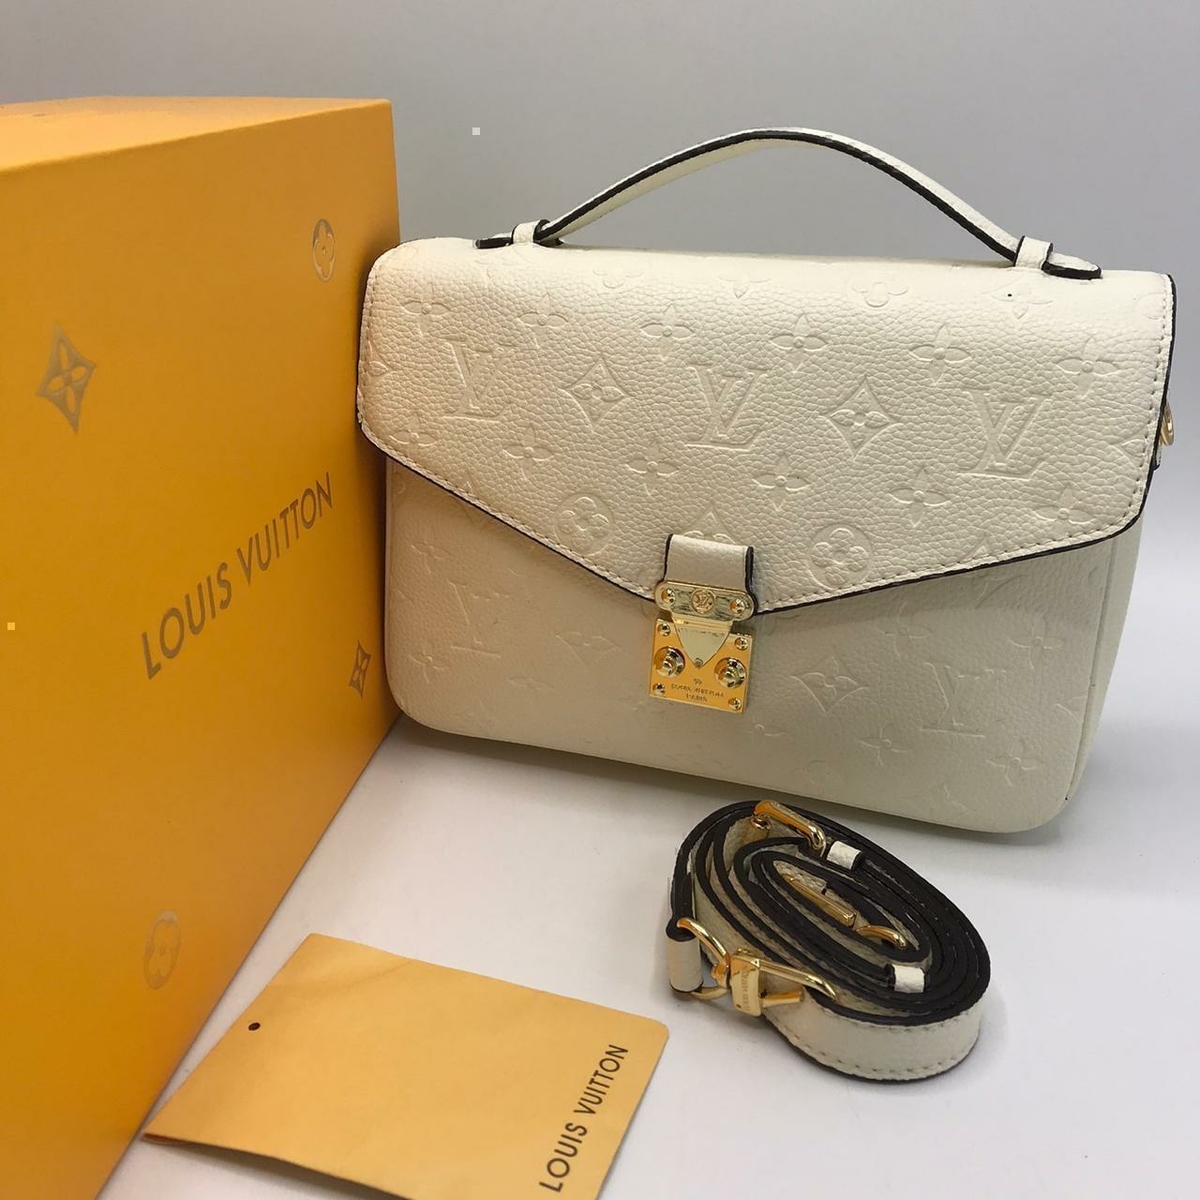 Louis Vuitton сумка #1 в «Globestyle» арт.4289MR